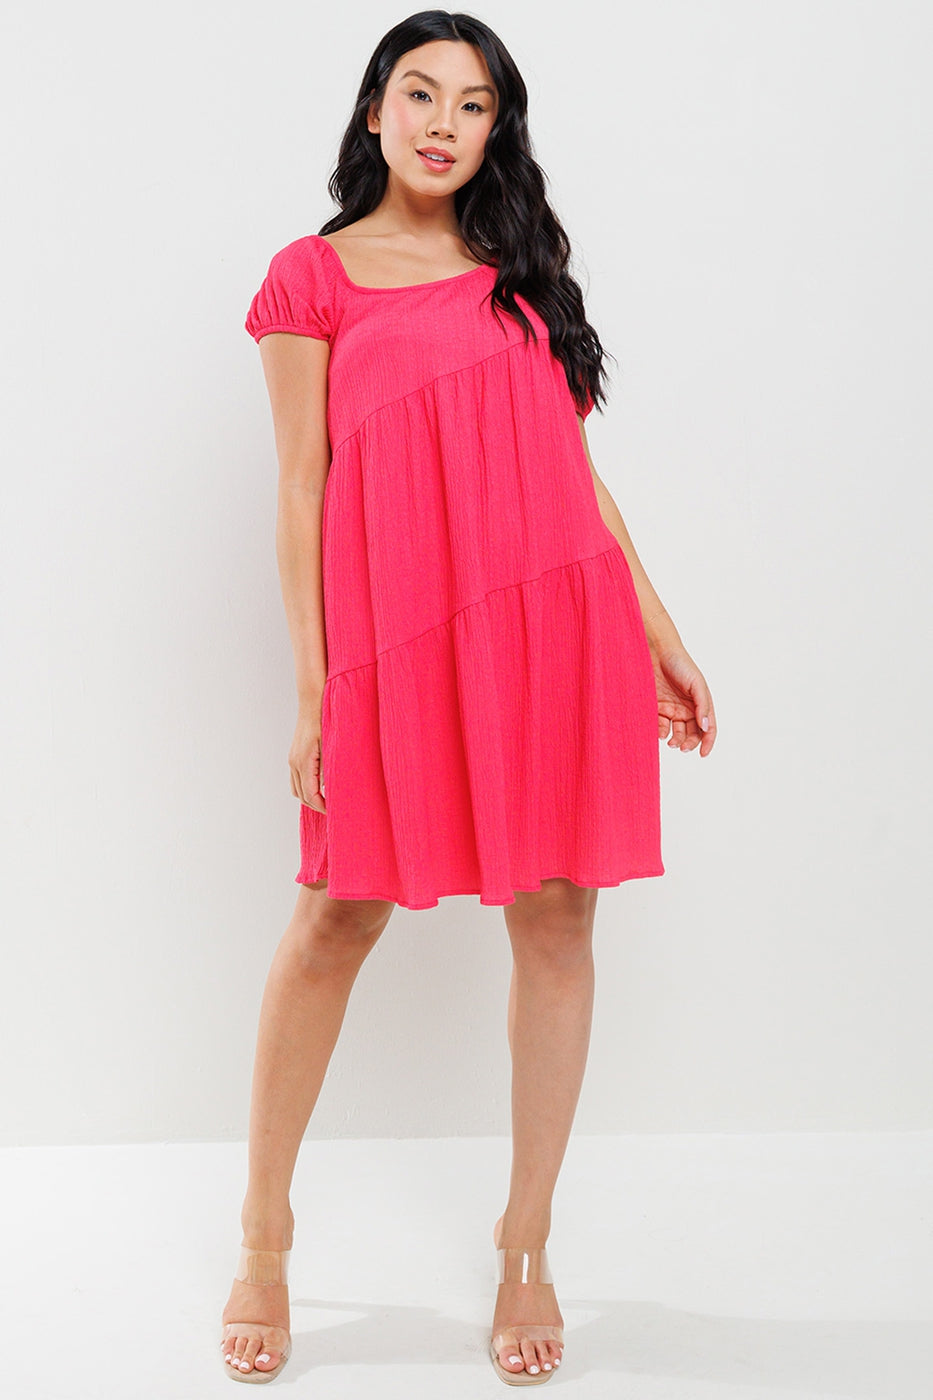 The Sassy & Sweet Off The Shoulder Dress - Pink